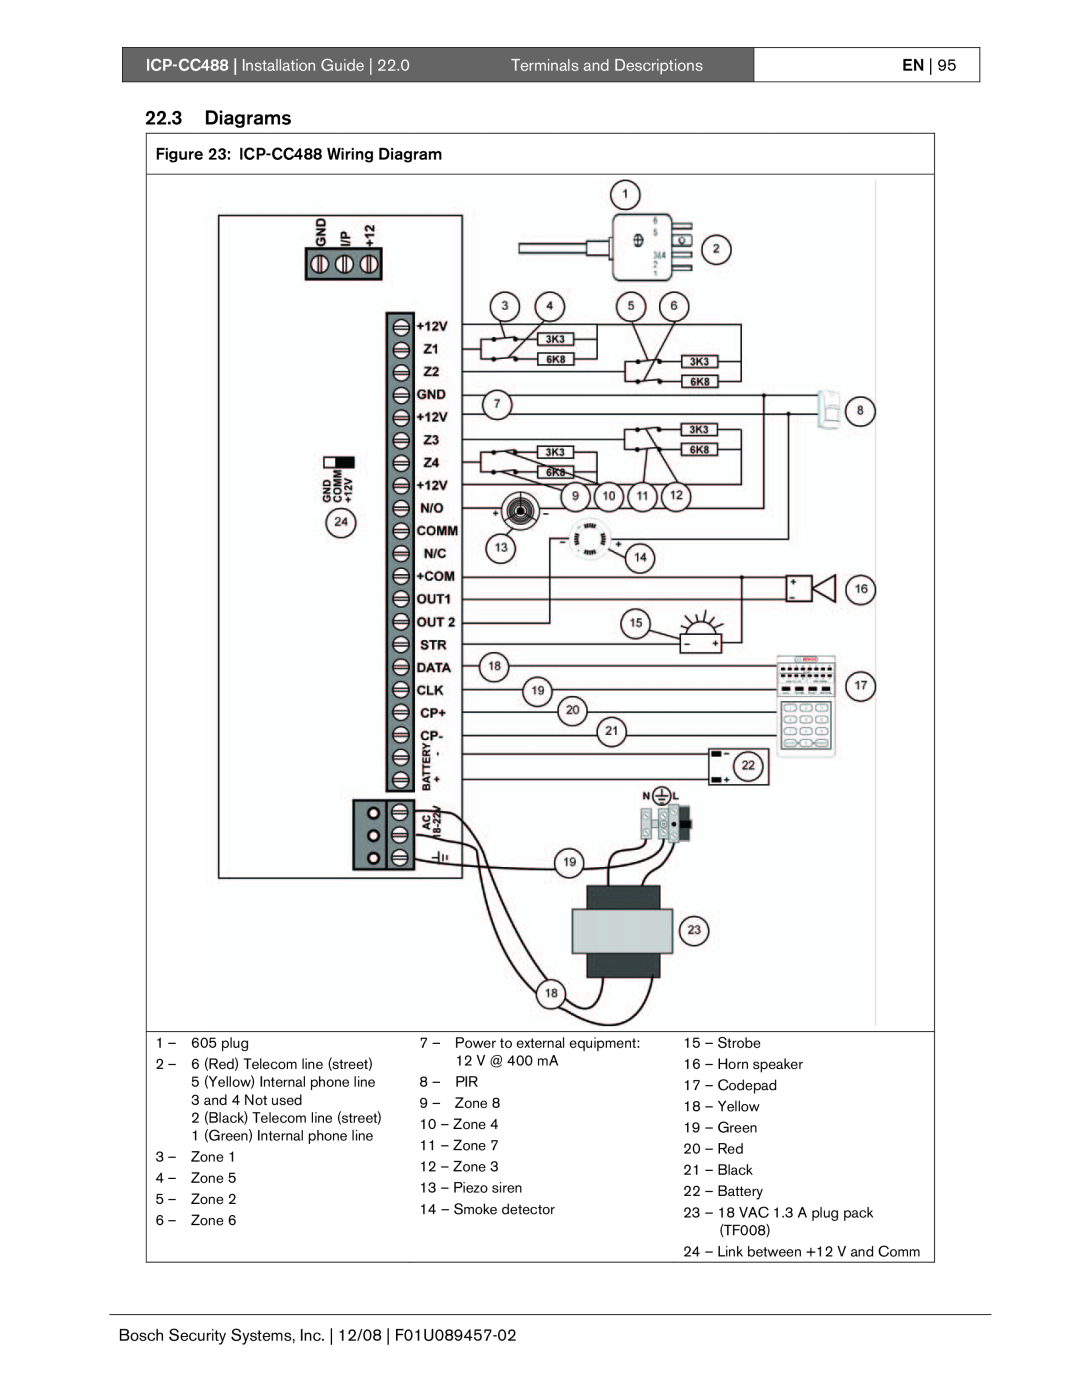 Bosch Appliances 22.3Diagrams, ICP-CC488| Installation Guide, Terminals and Descriptions, En, ICP-CC488Wiring Diagram 